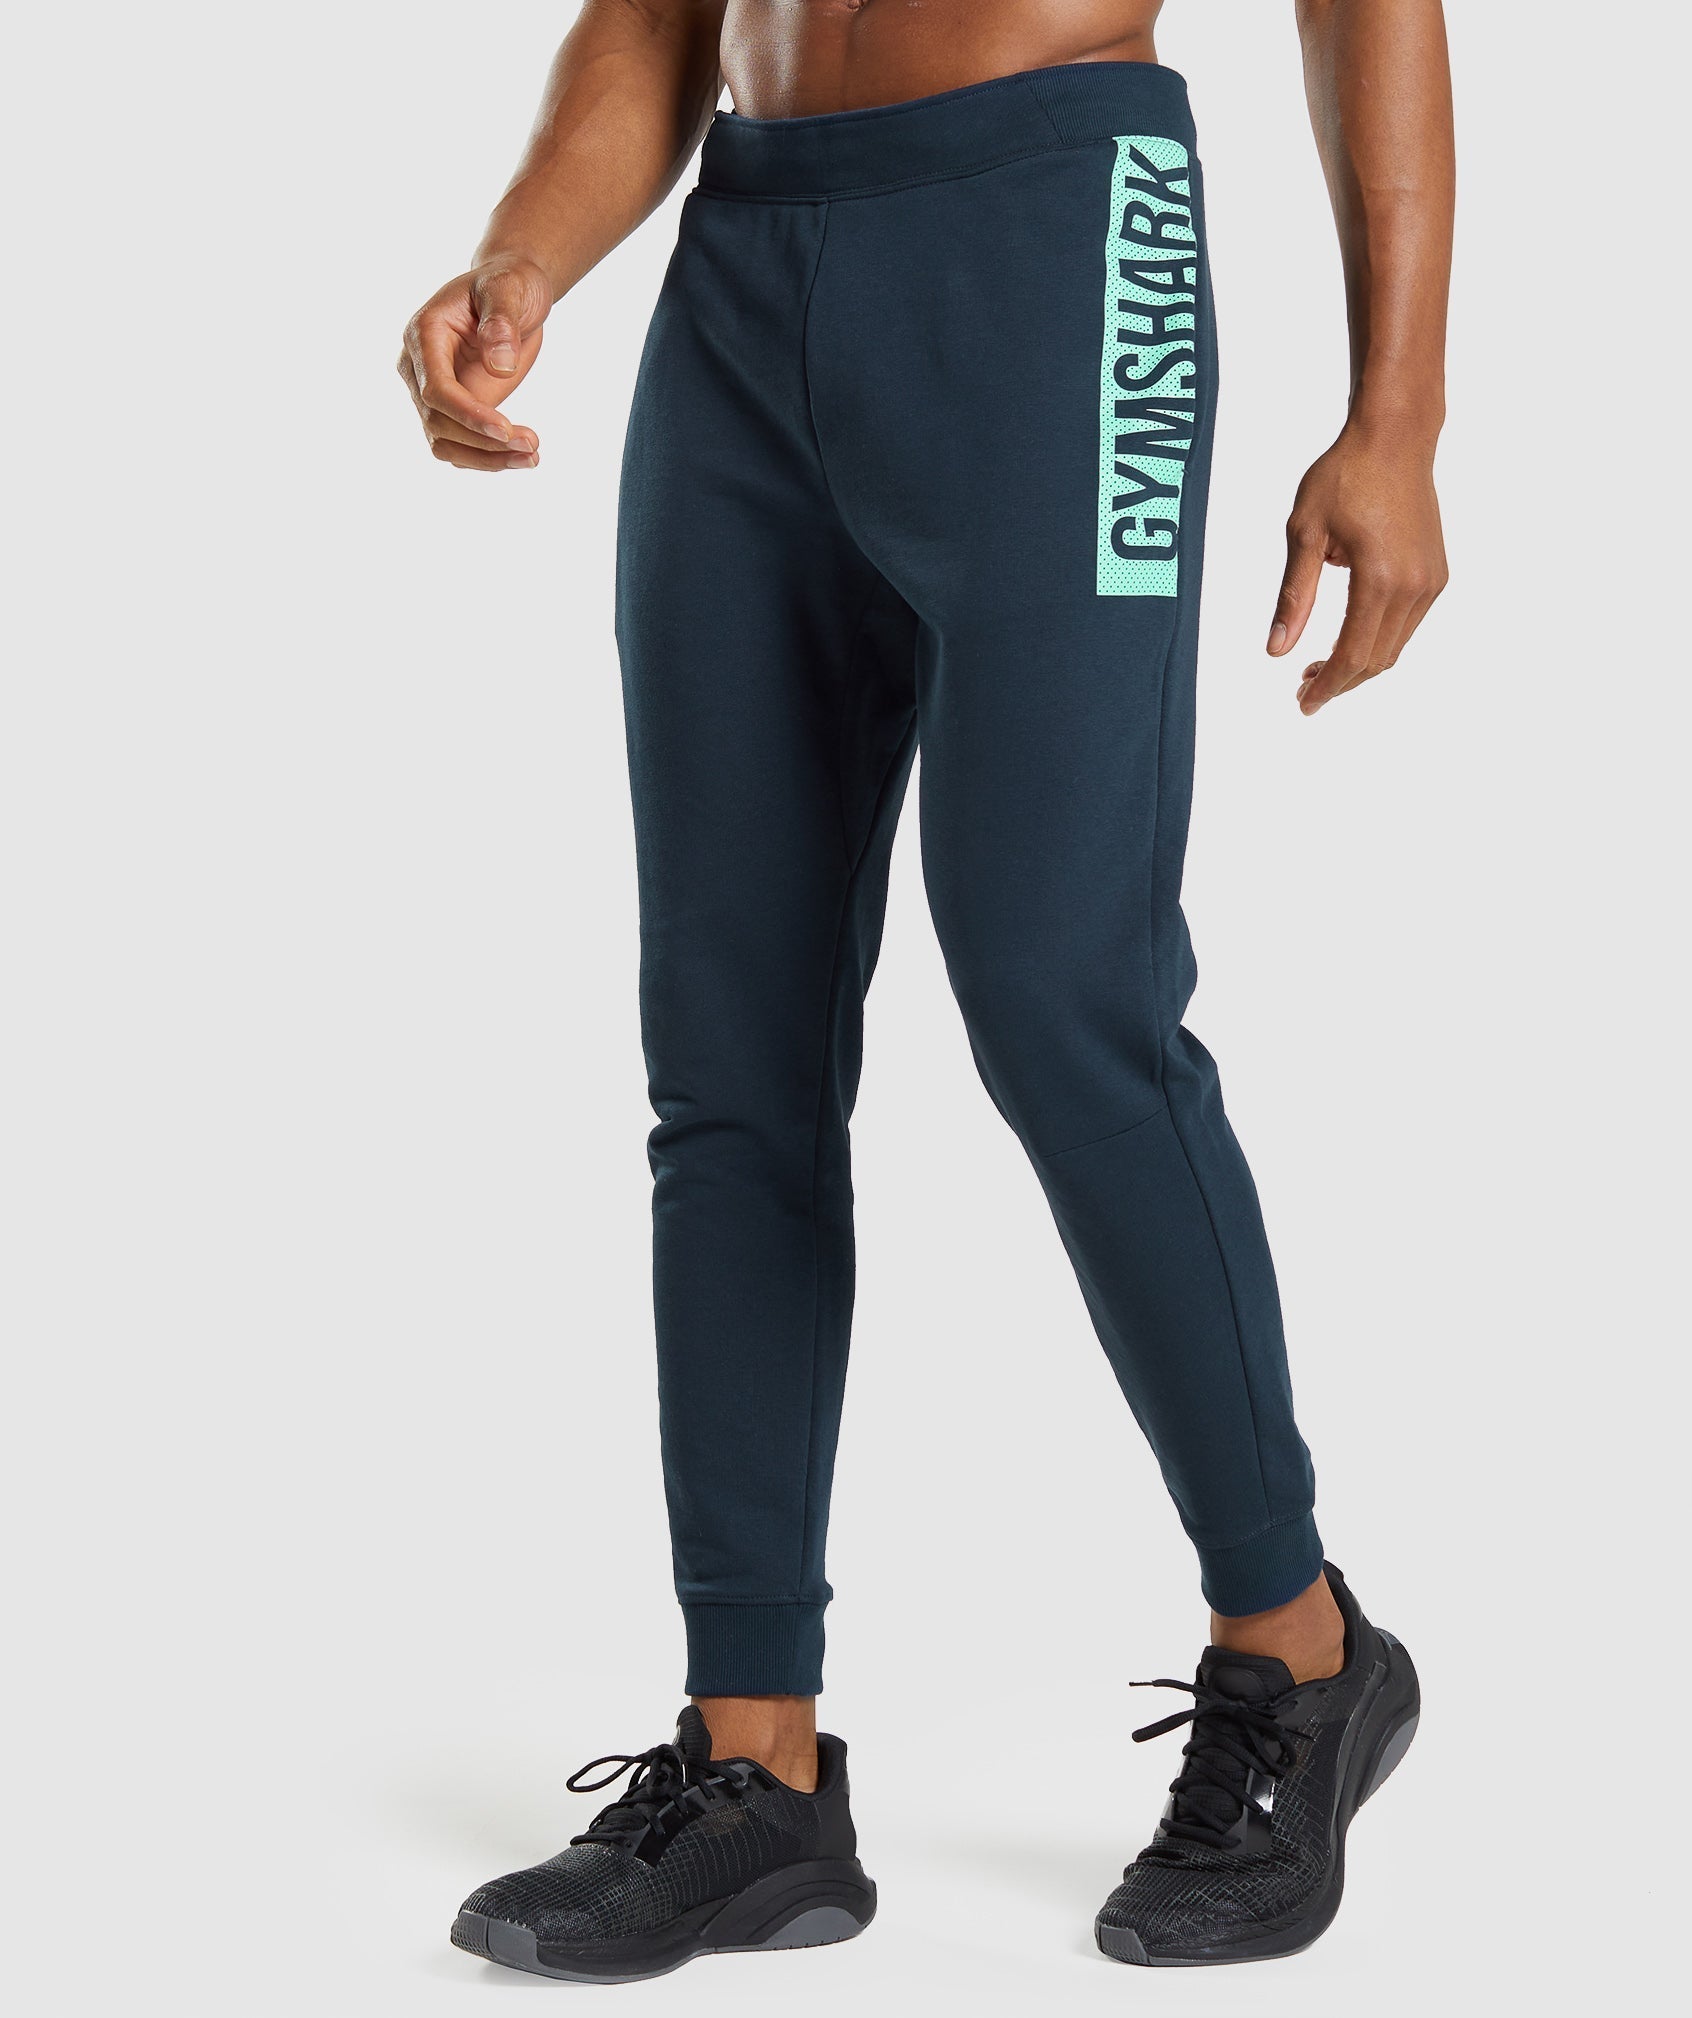 Gymshark Crest Joggers - Navy  Gymshark pants, Gymshark joggers